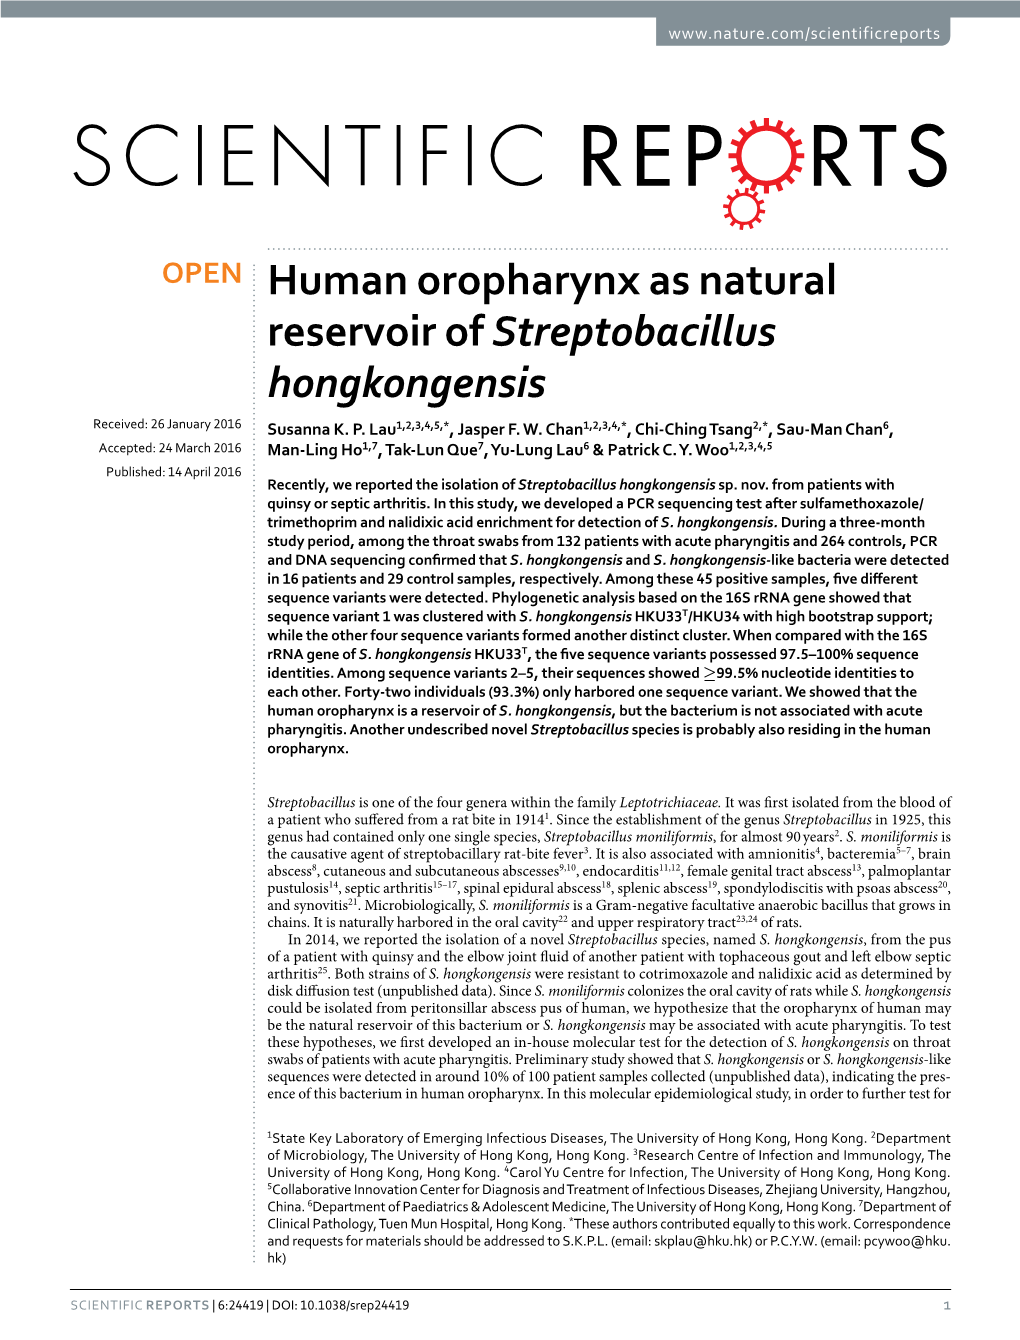 Human Oropharynx As Natural Reservoir of Streptobacillus Hongkongensis Received: 26 January 2016 Susanna K